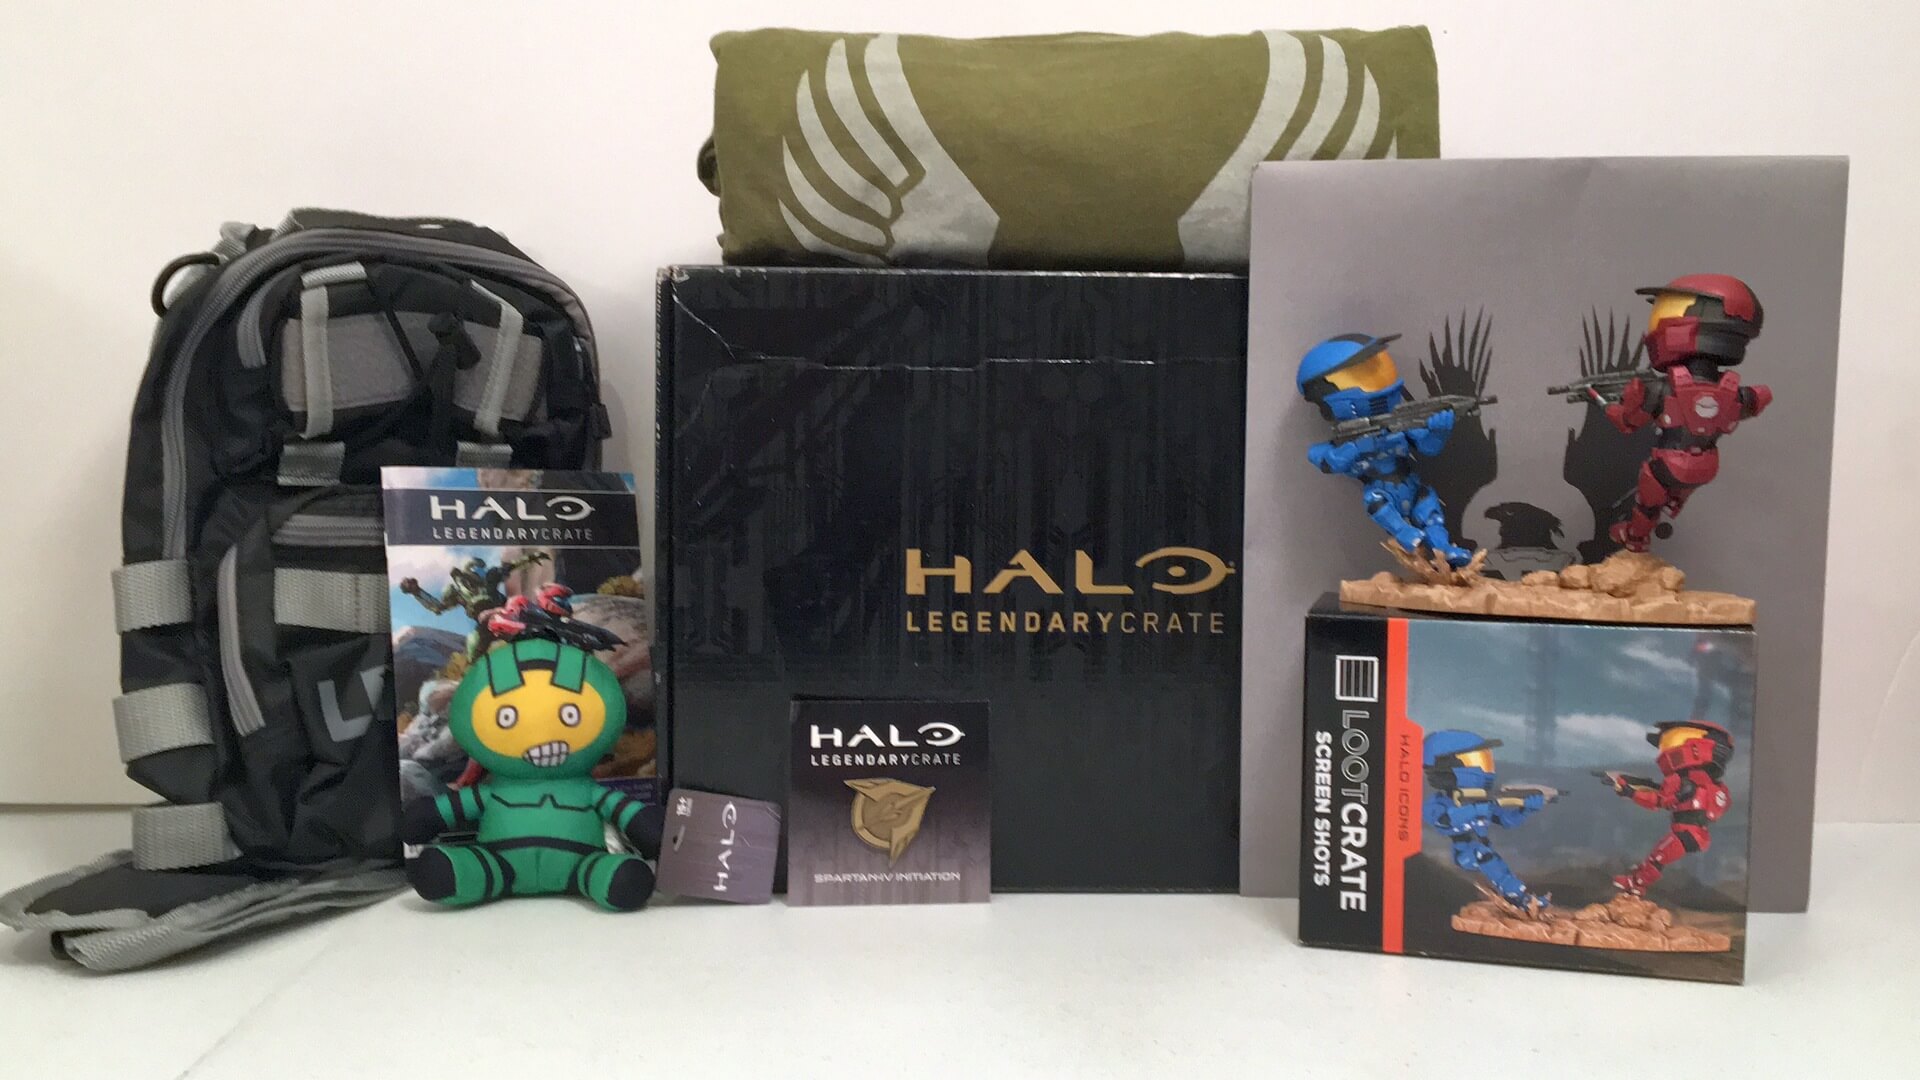 Halo legendary